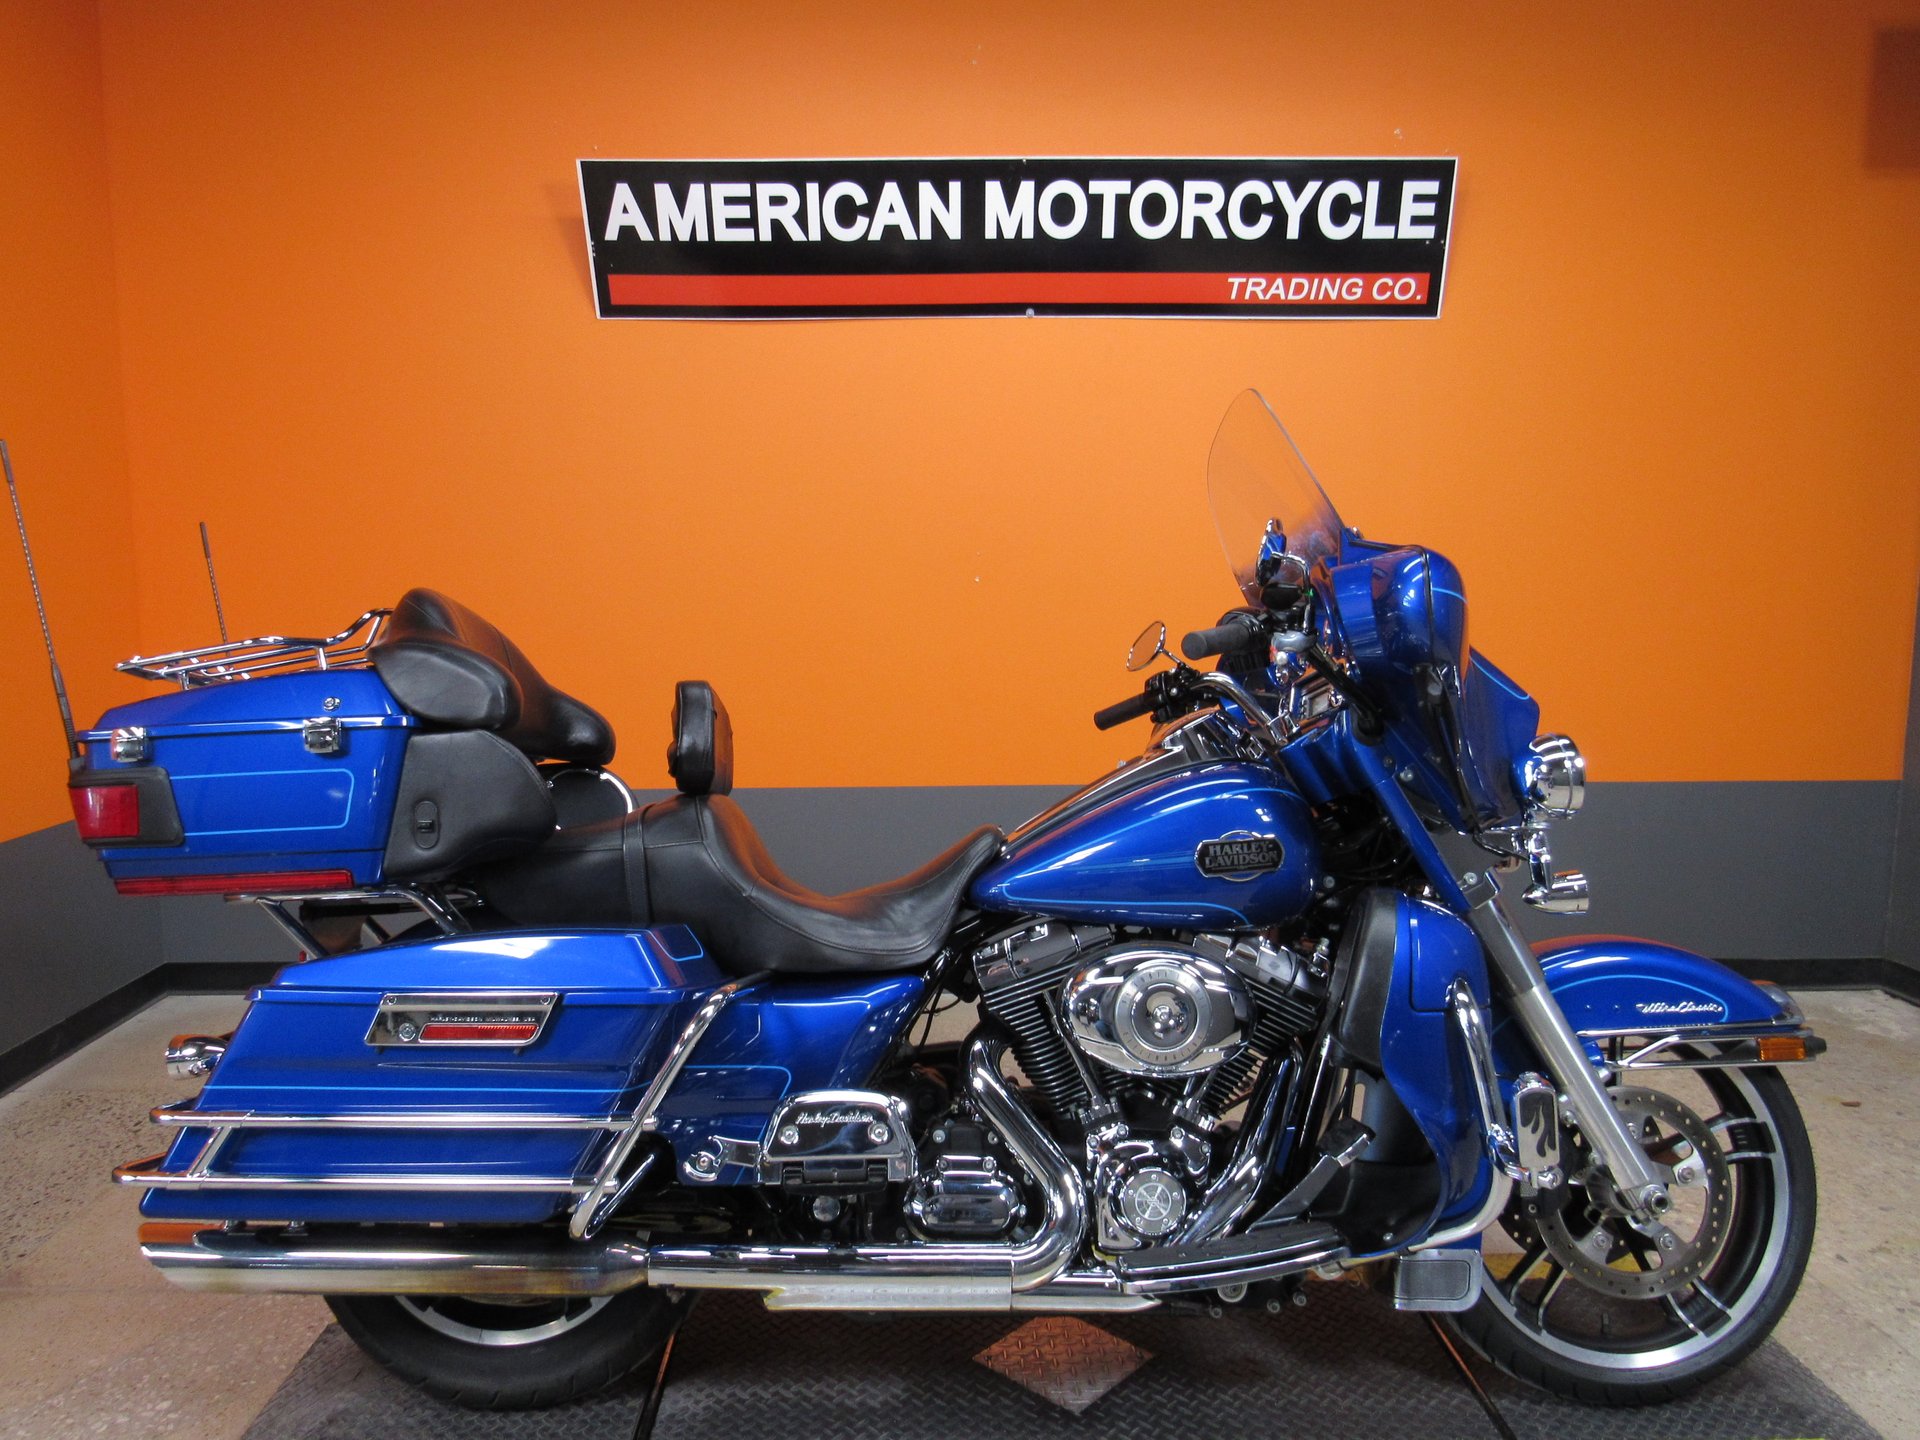 2010 Harley-Davidson Ultra Classic | American Motorcycle Trading Company -  Used Harley Davidson Motorcycles